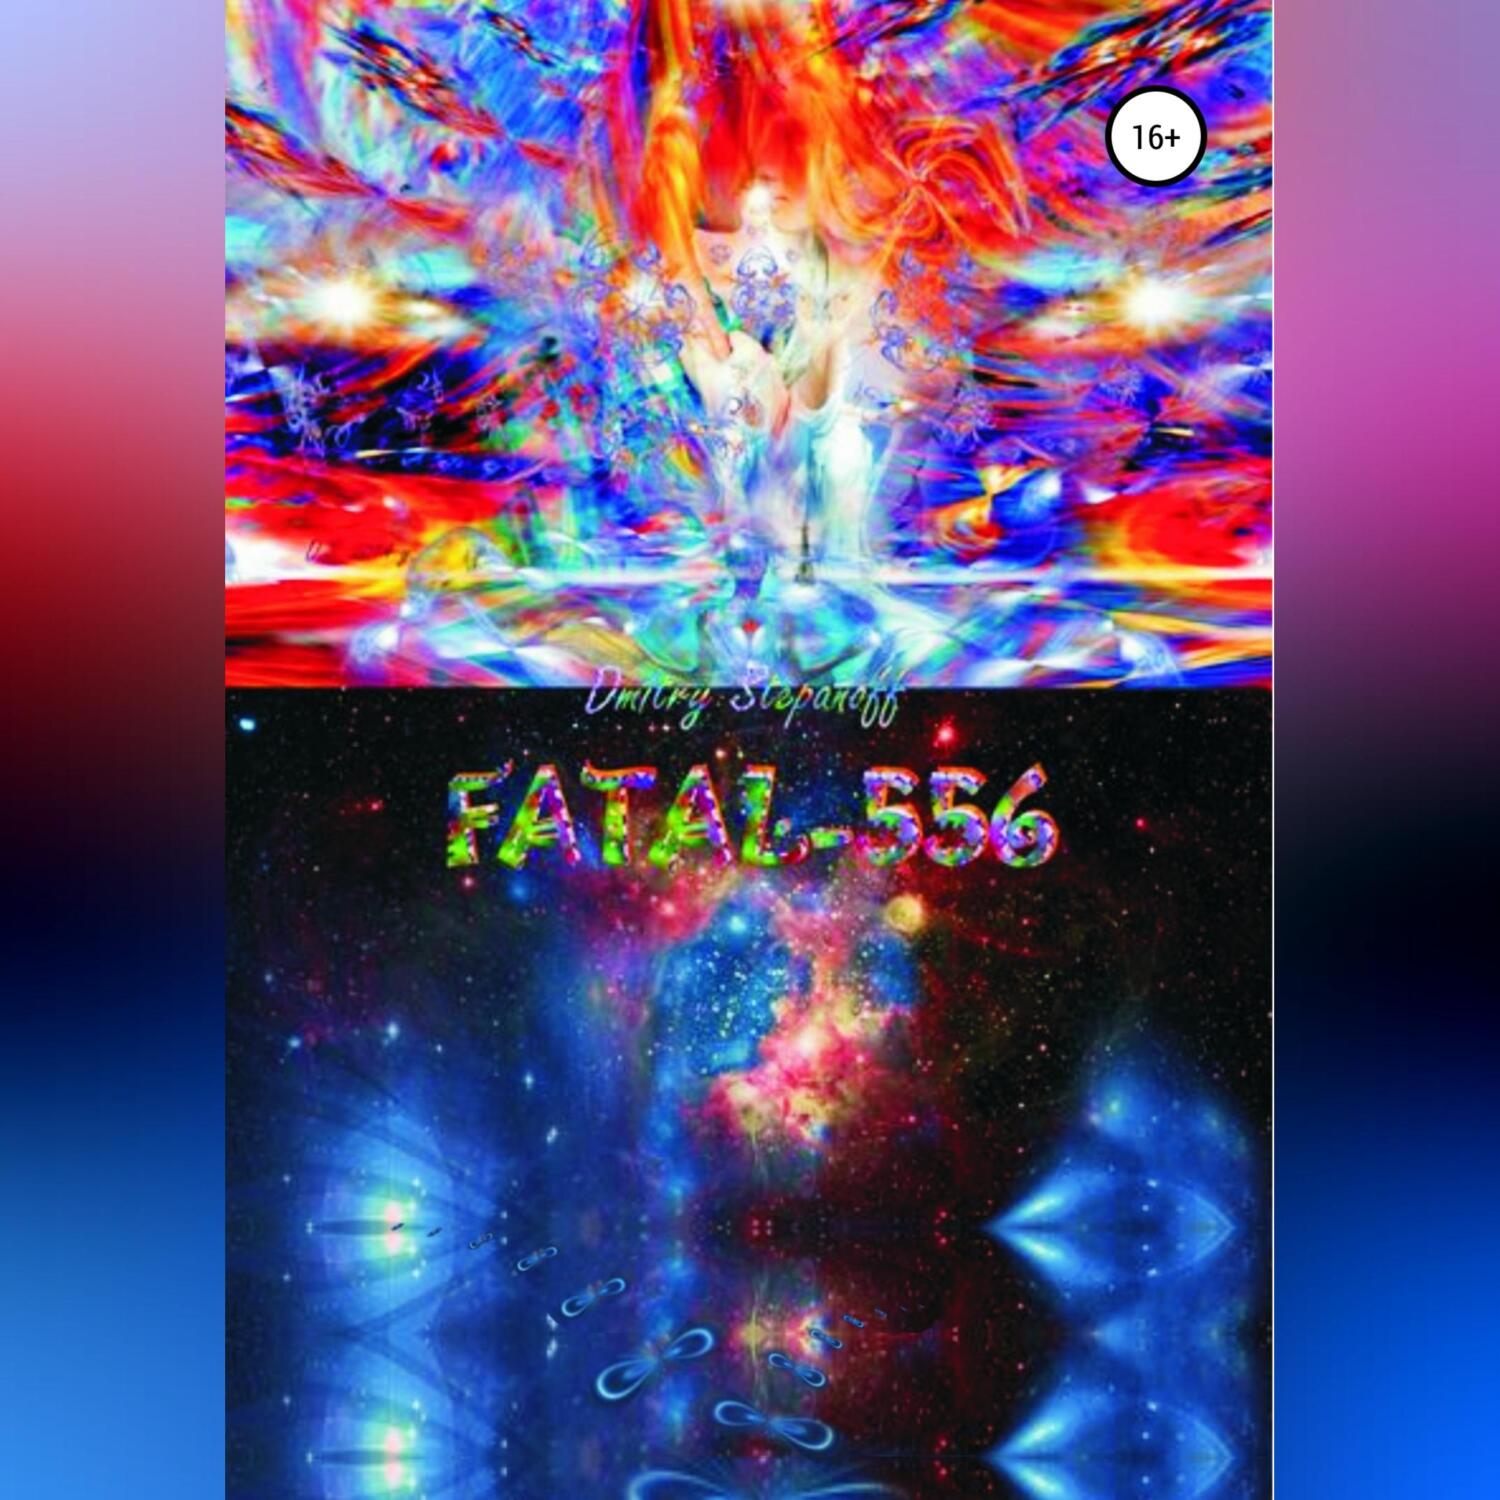 FATAL-556